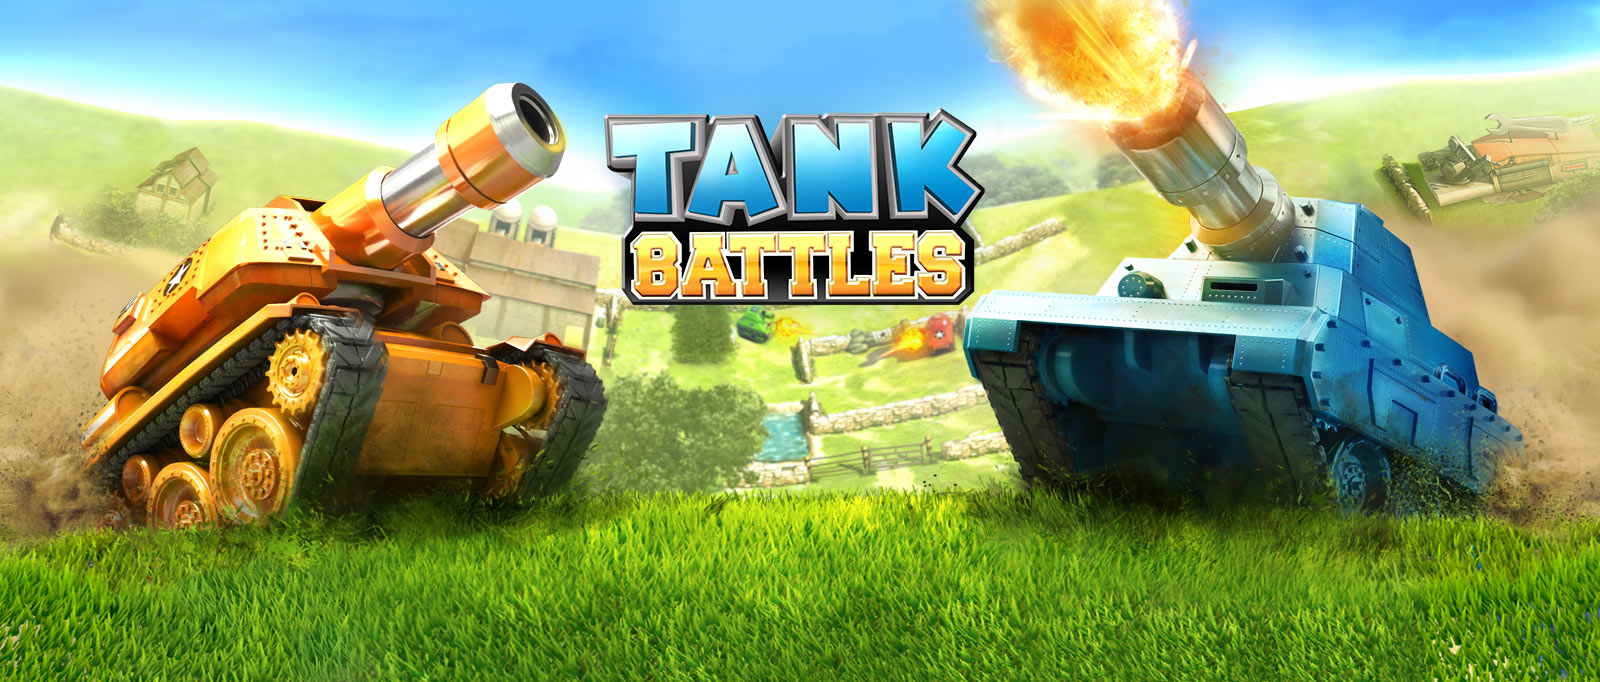 Tank Battles Patlayan Eğlence!